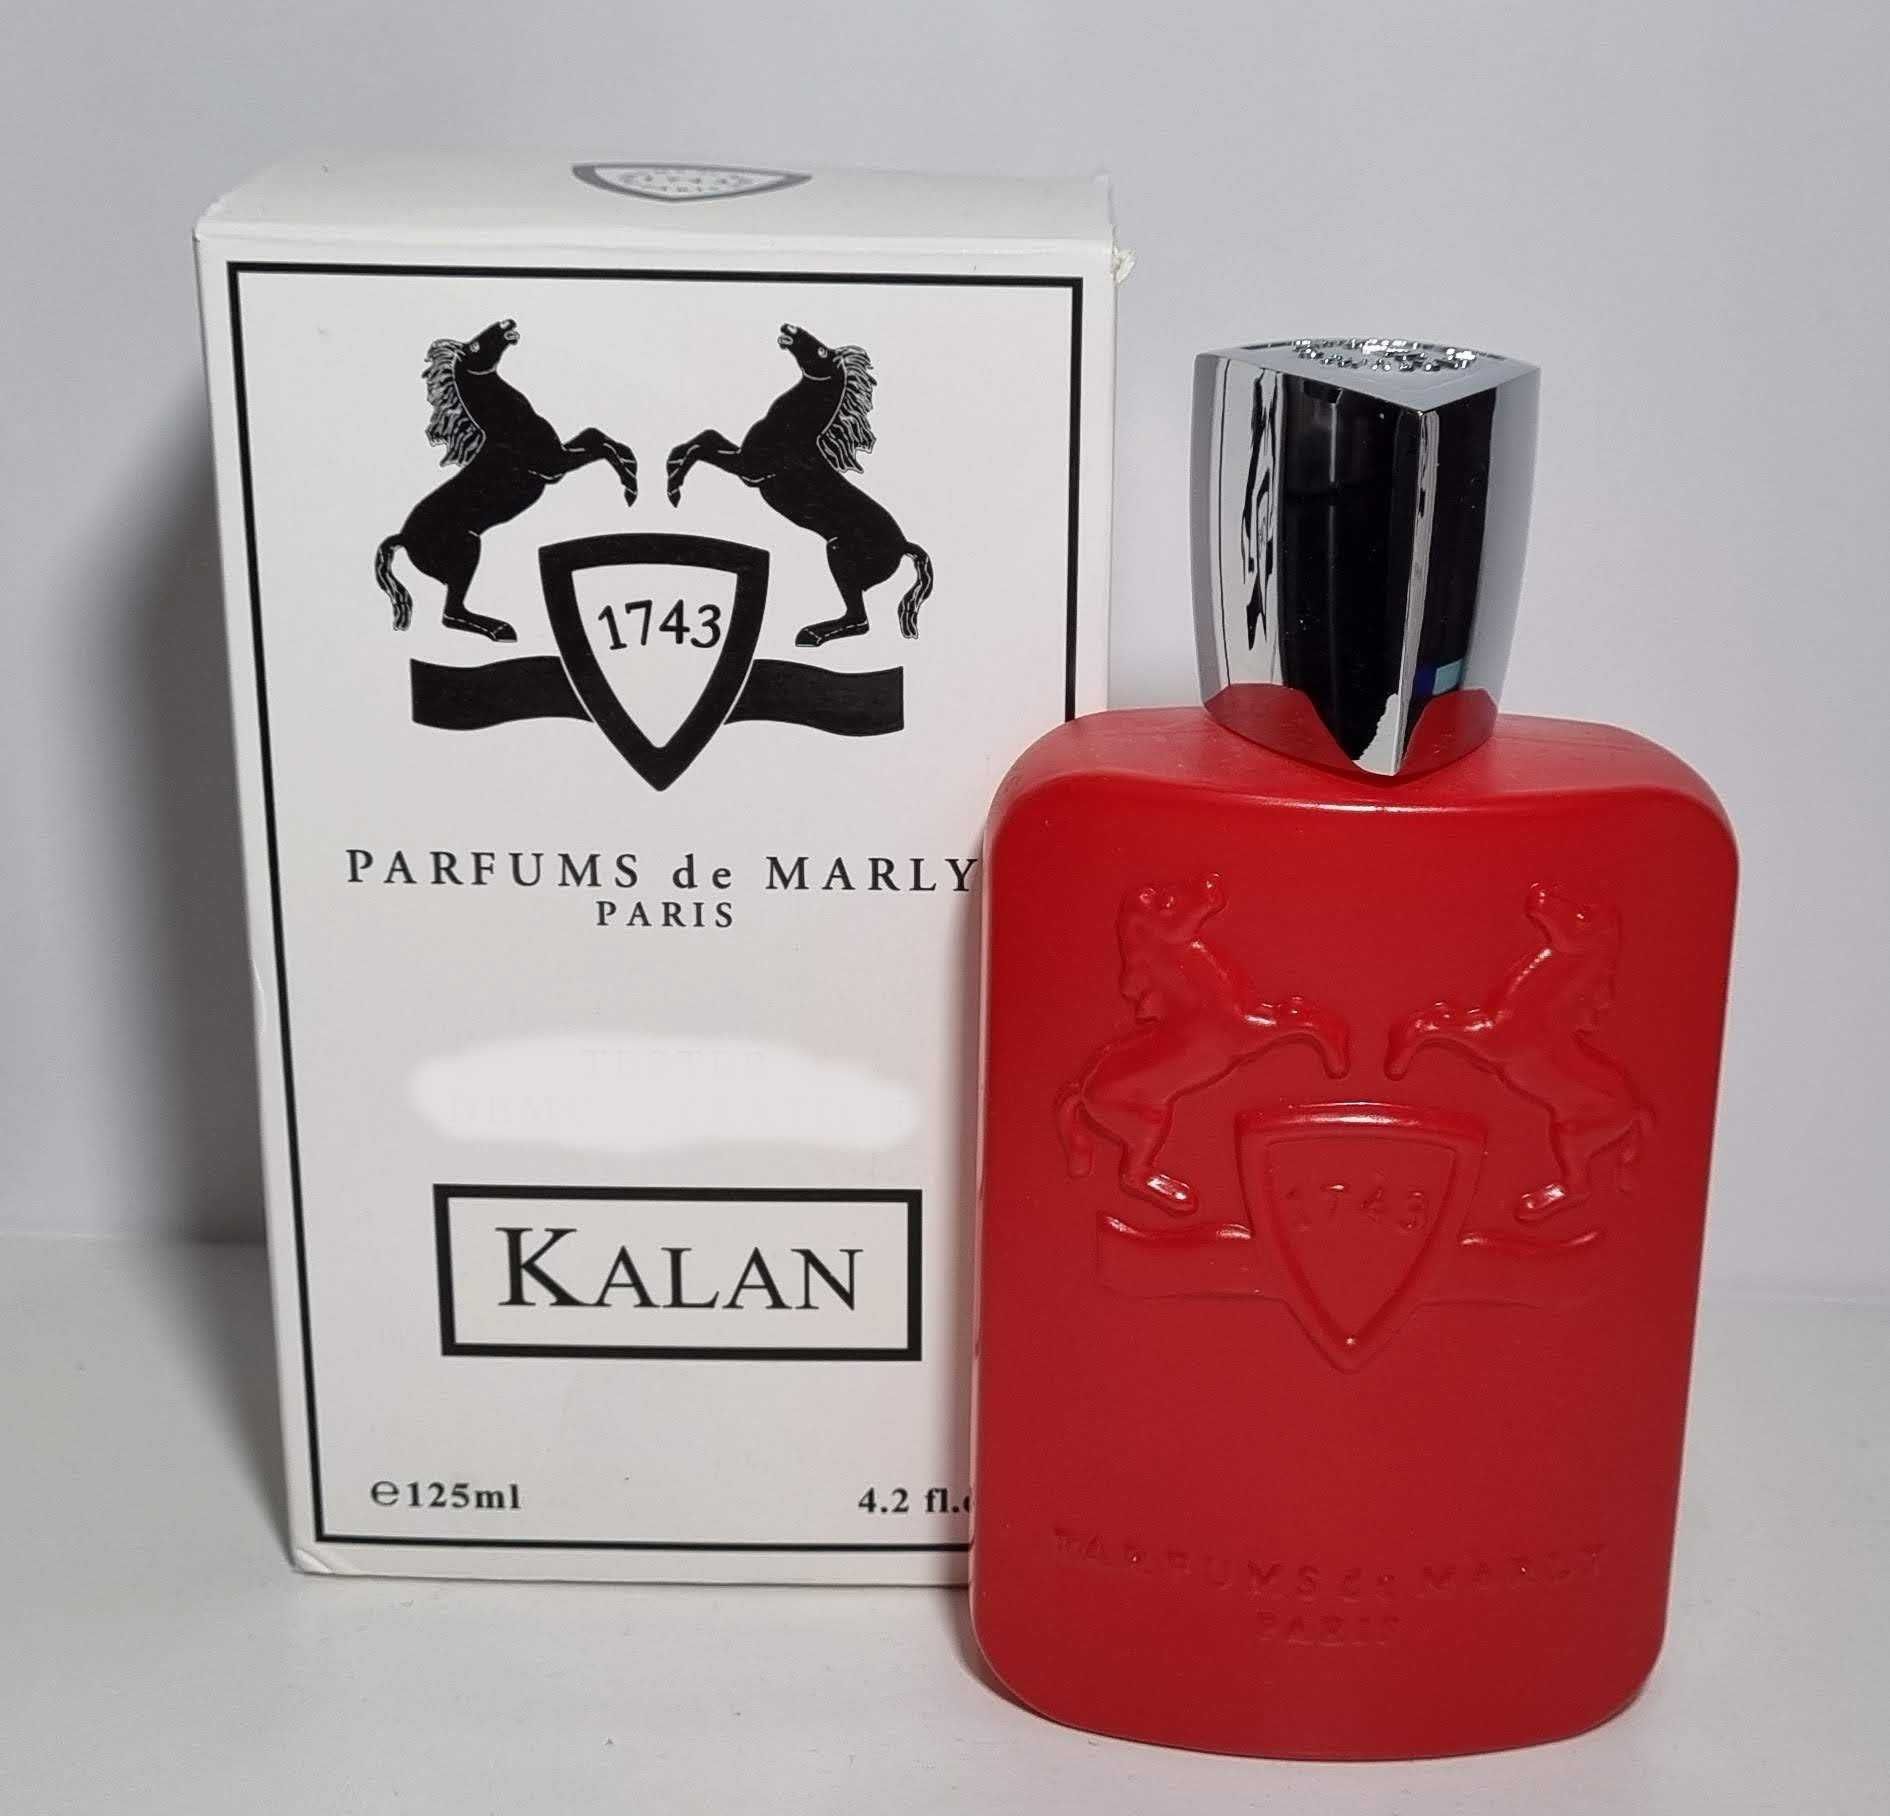 Parfums De Marly - Layton, Kalan, Pegasus, Delina, Cassili, EDP